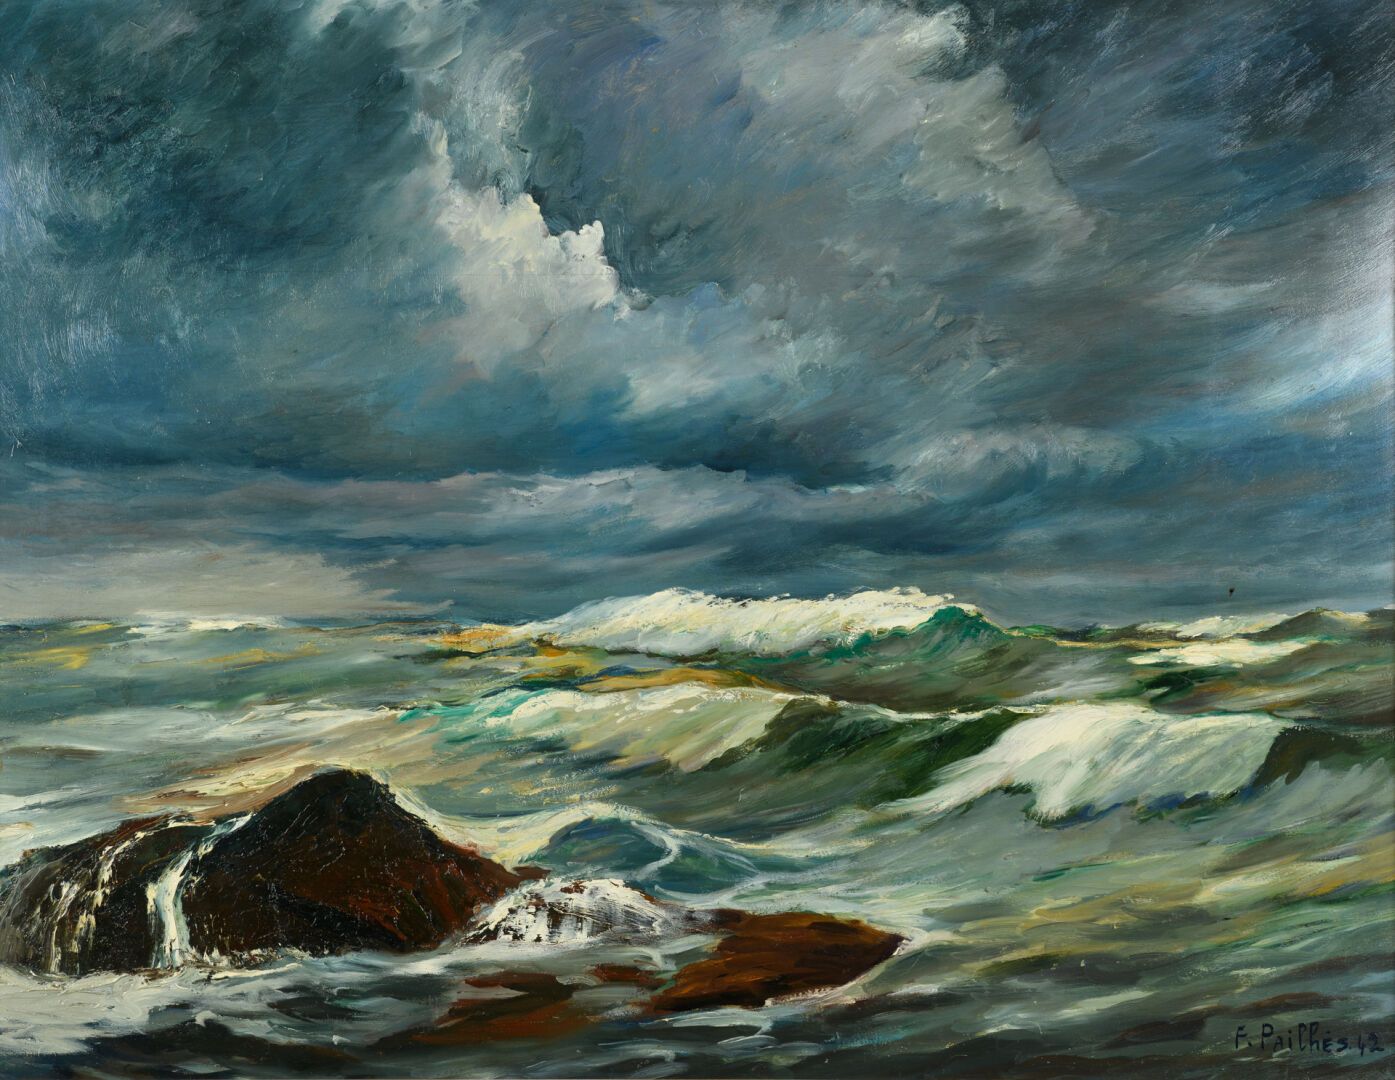 Null Fred PAILHES 1902-1991 "Sturm auf dem Meer" HSP, SBD, datiert 1942, 70x90cm